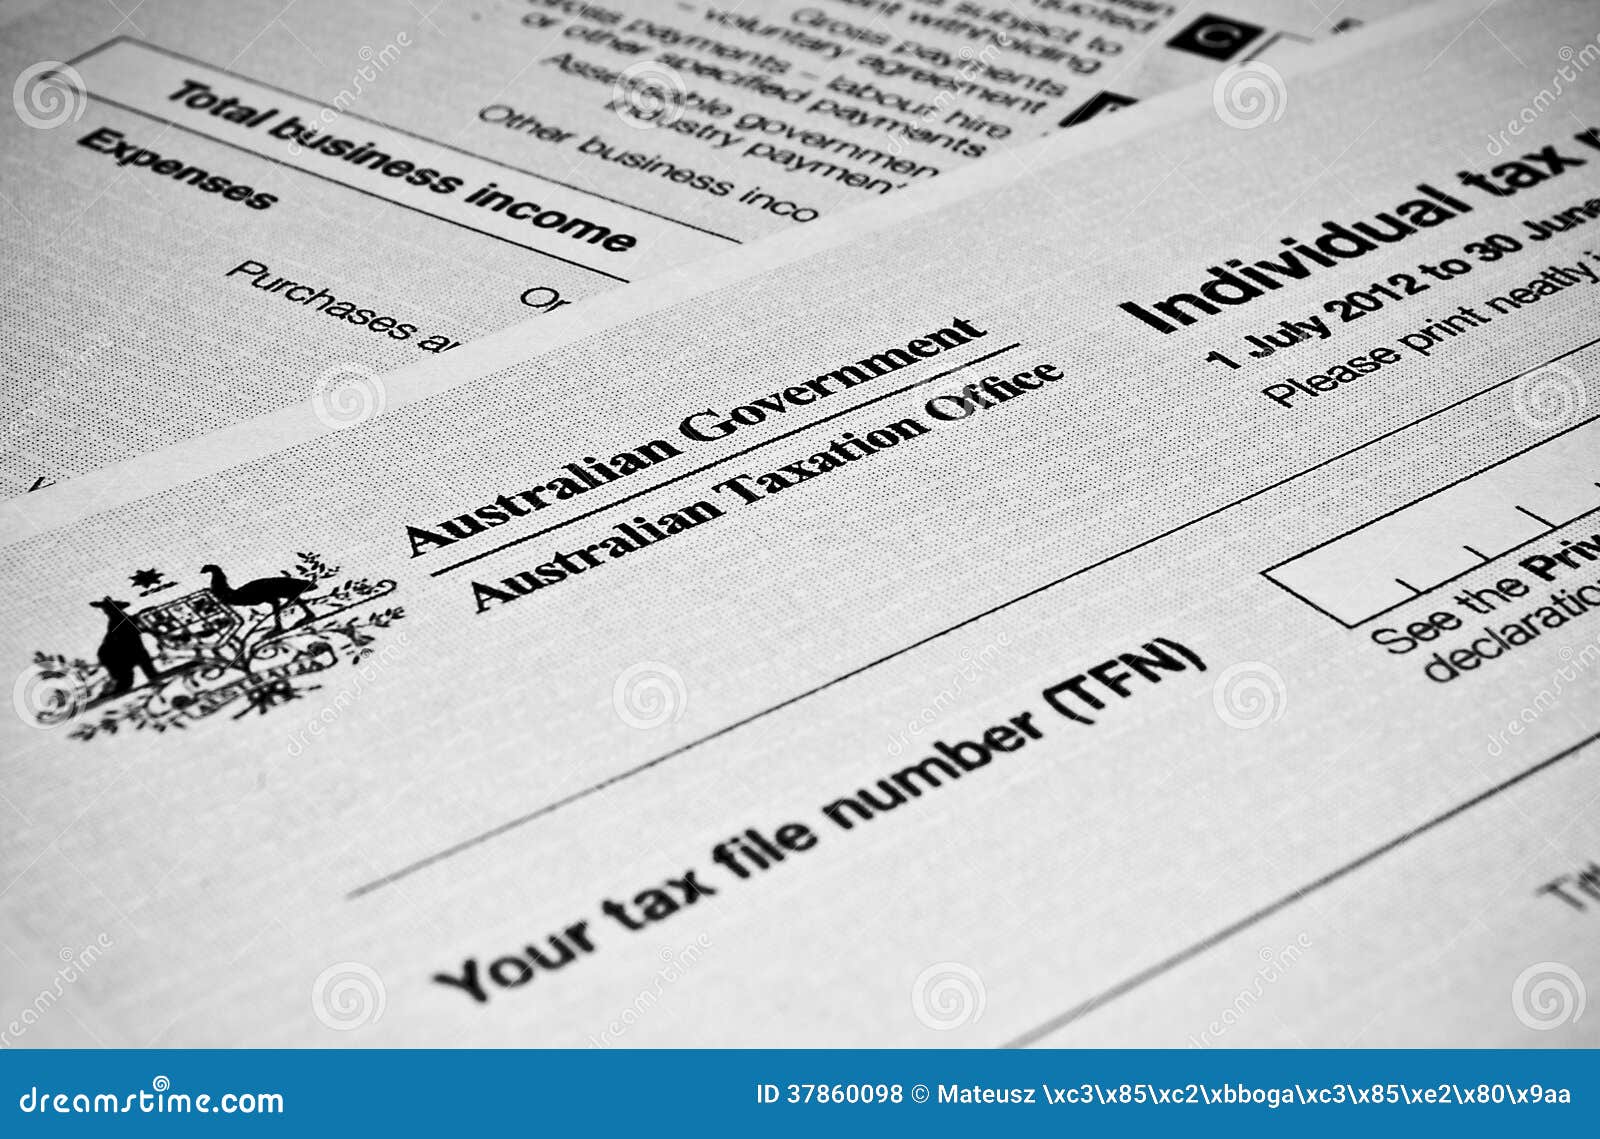 australian-individual-tax-return-form-stock-photo-image-of-individual